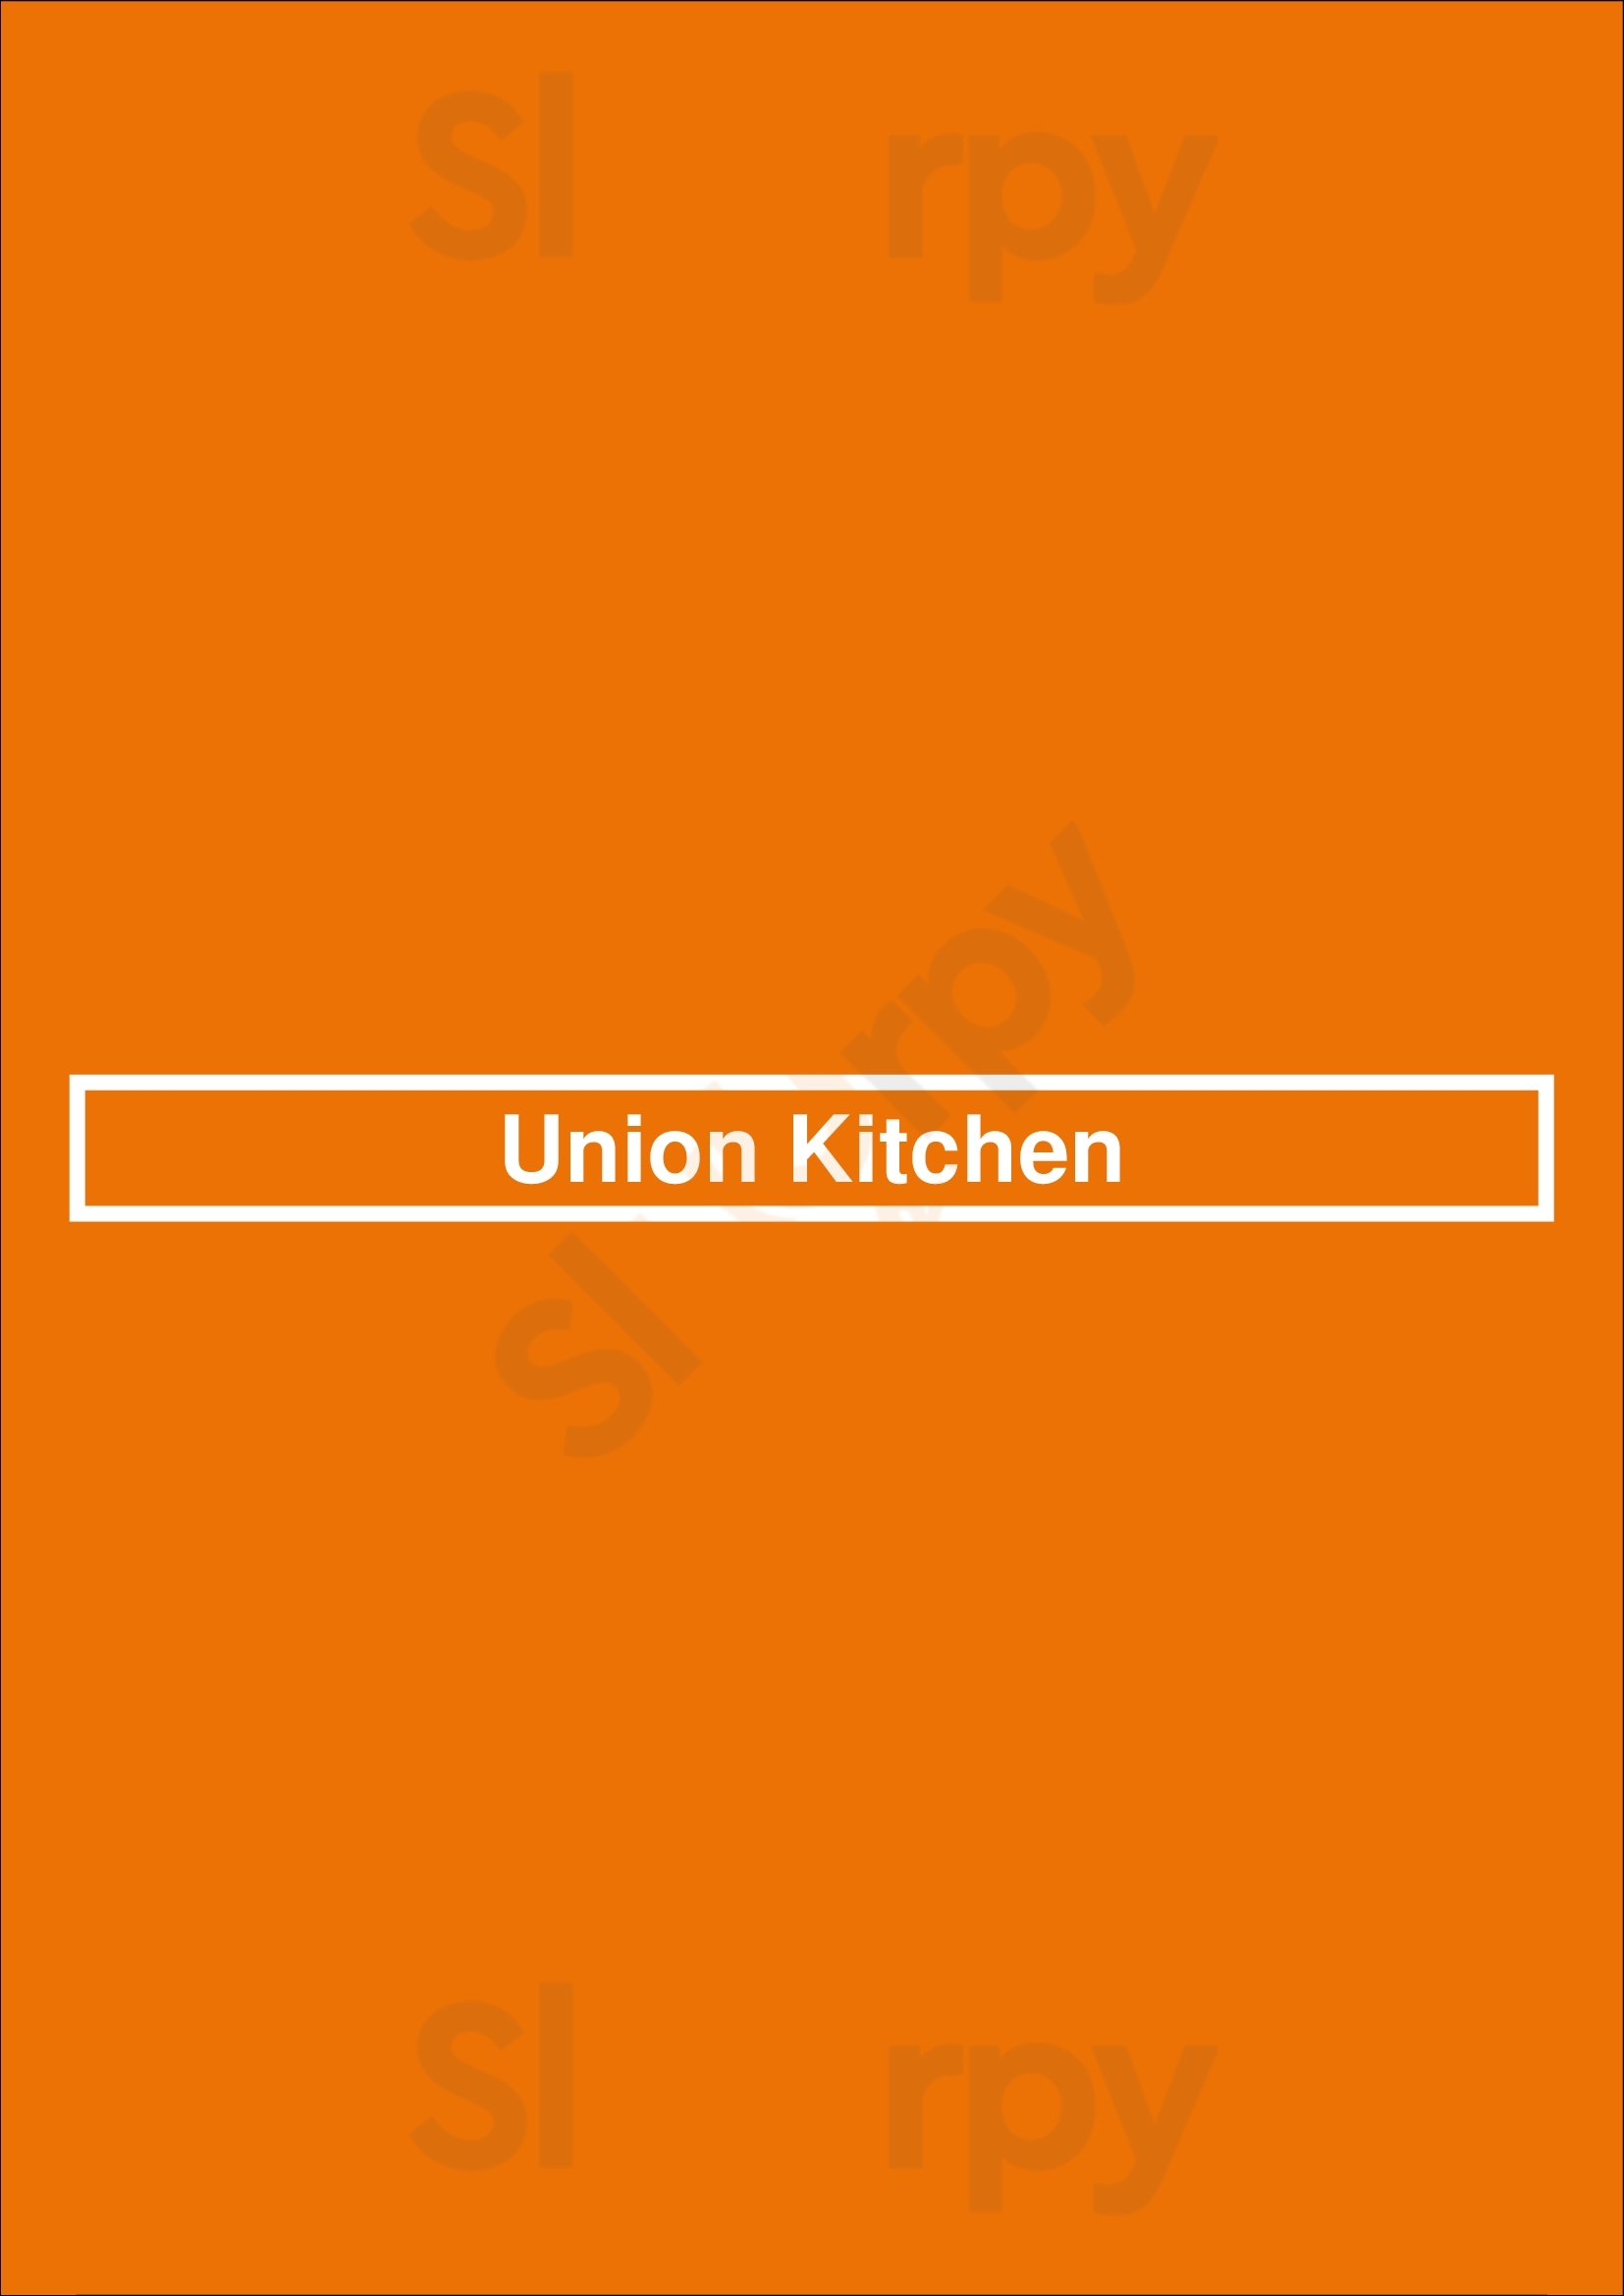 Union Kitchen Houston Menu - 1